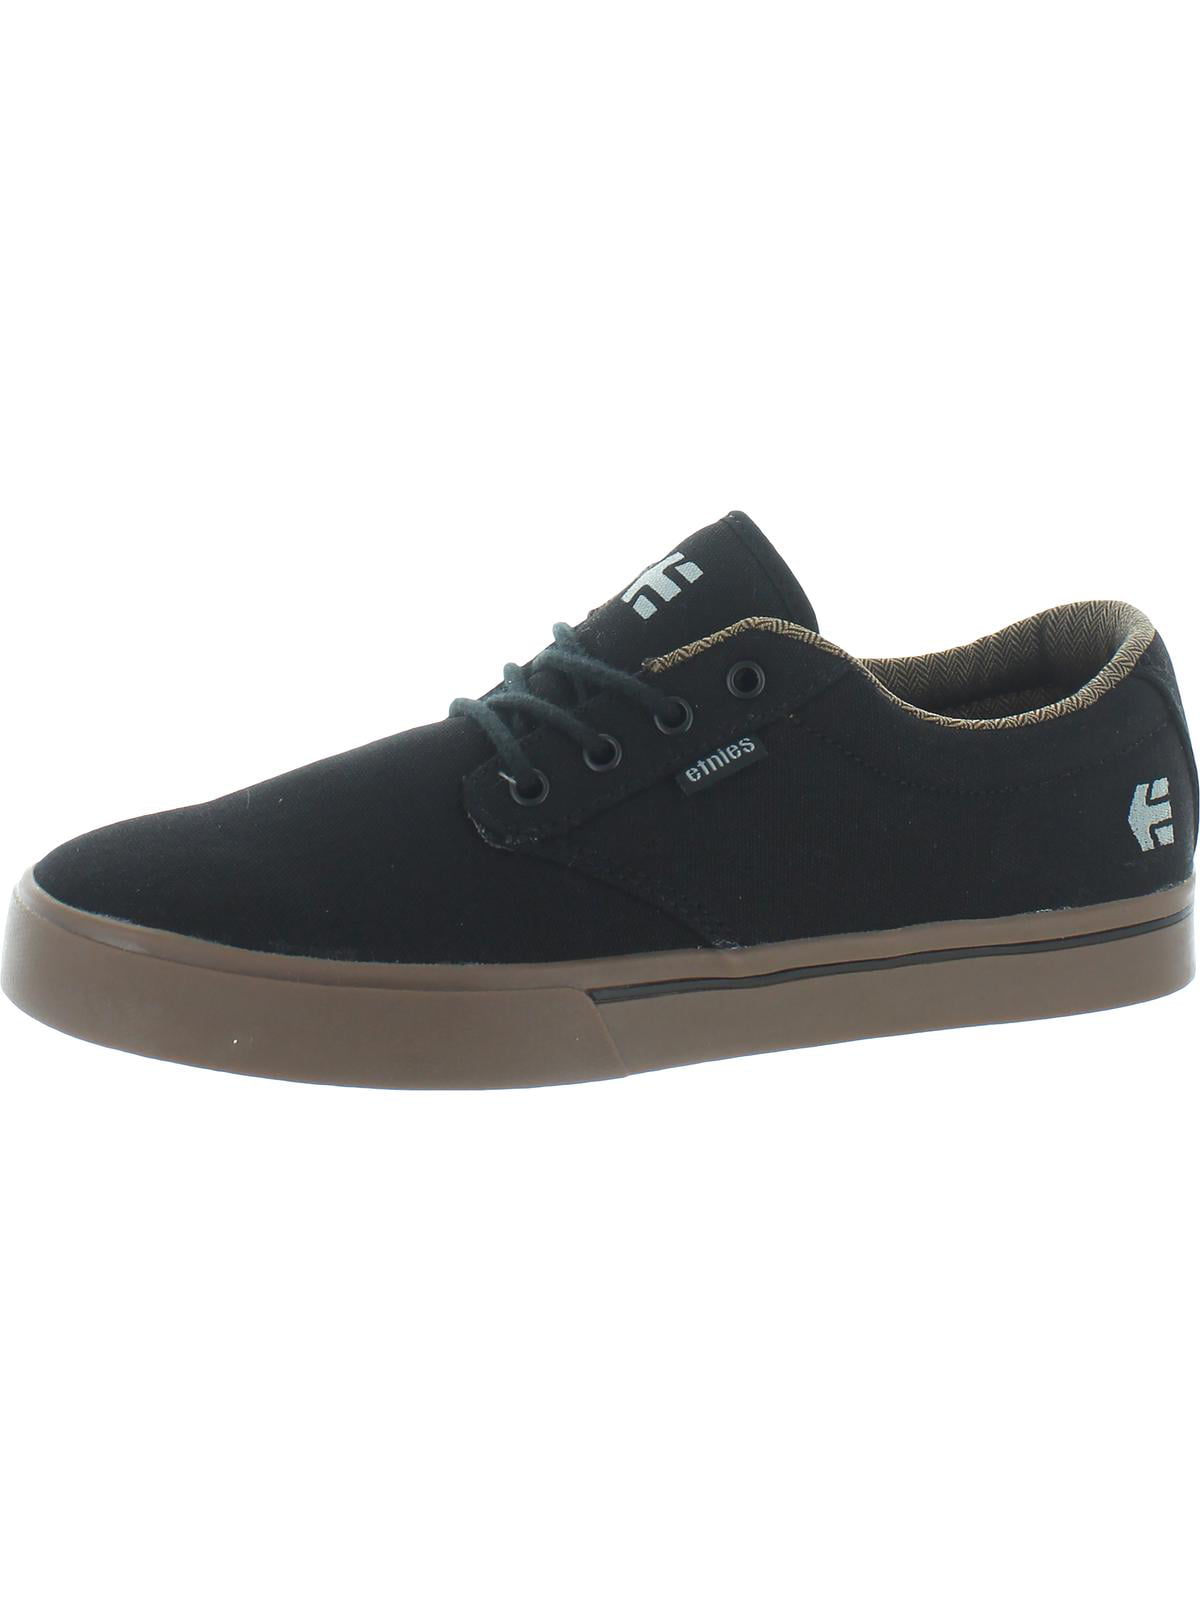 Etnies Skateboard Shoes Jameson 2 Eco Green//Black Mens